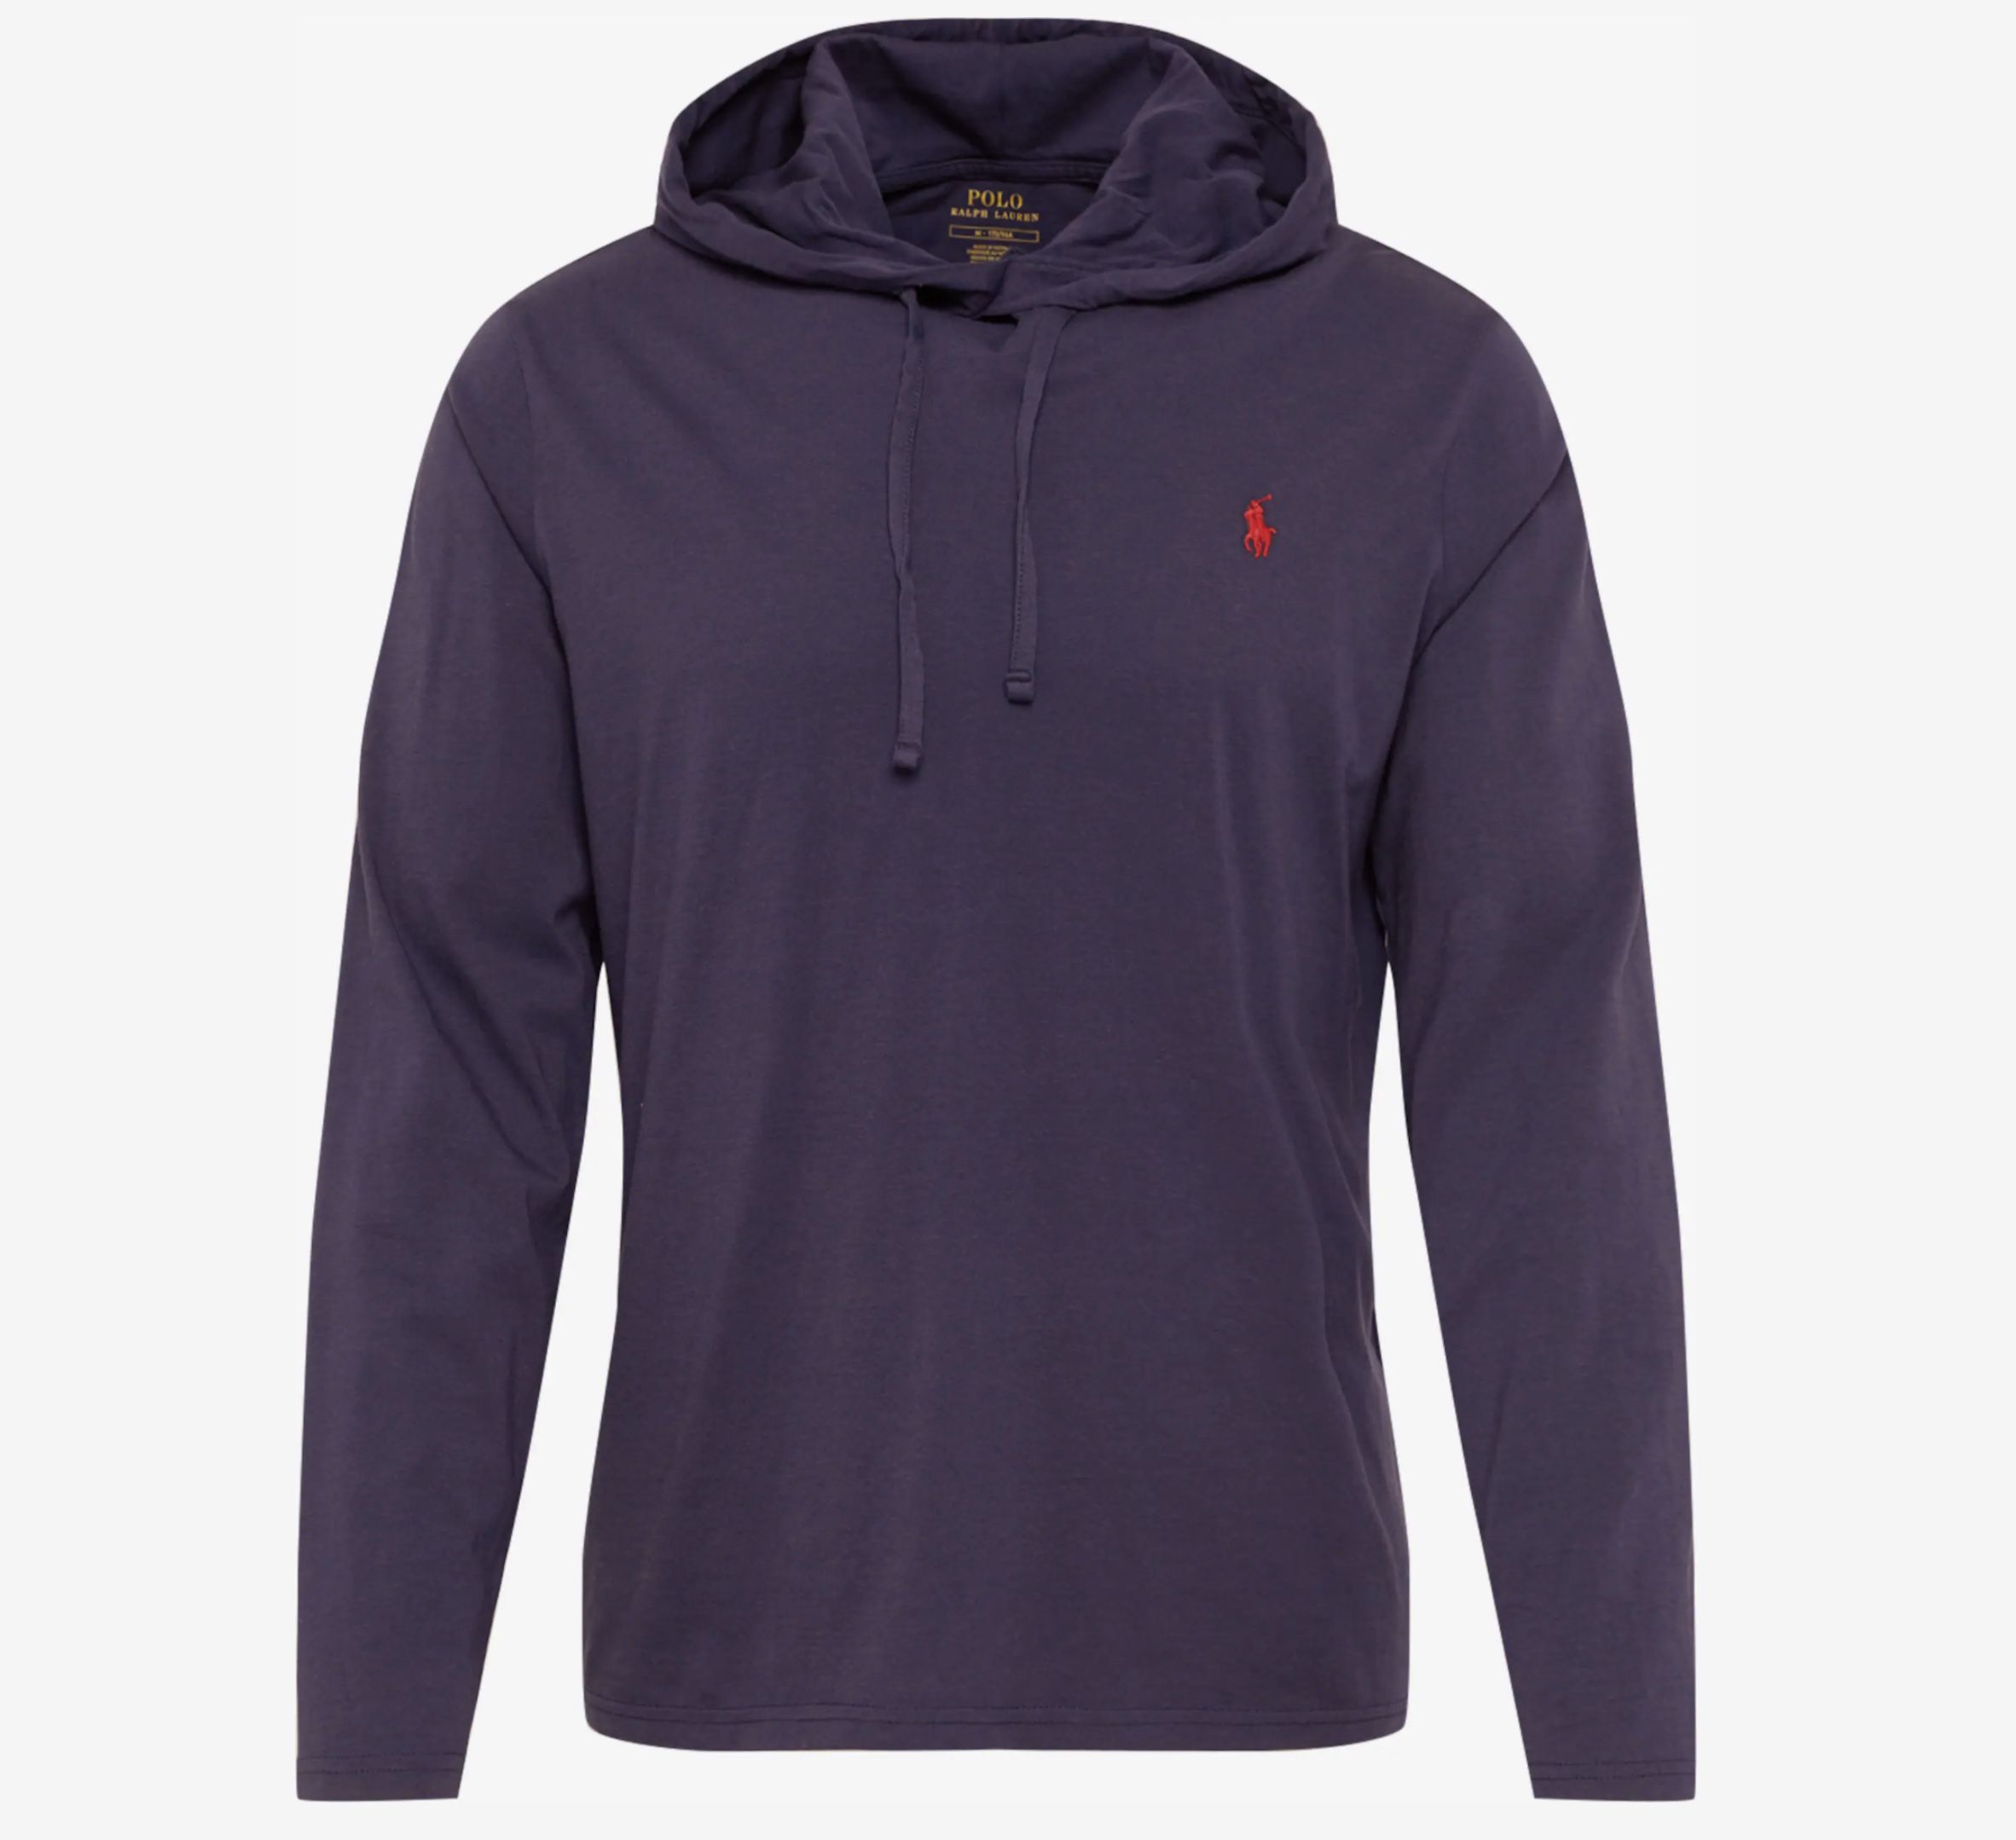 Polo Ralph Lauren Kapuzen Sweatshirt in Lila für 69,90€ (statt 79€)